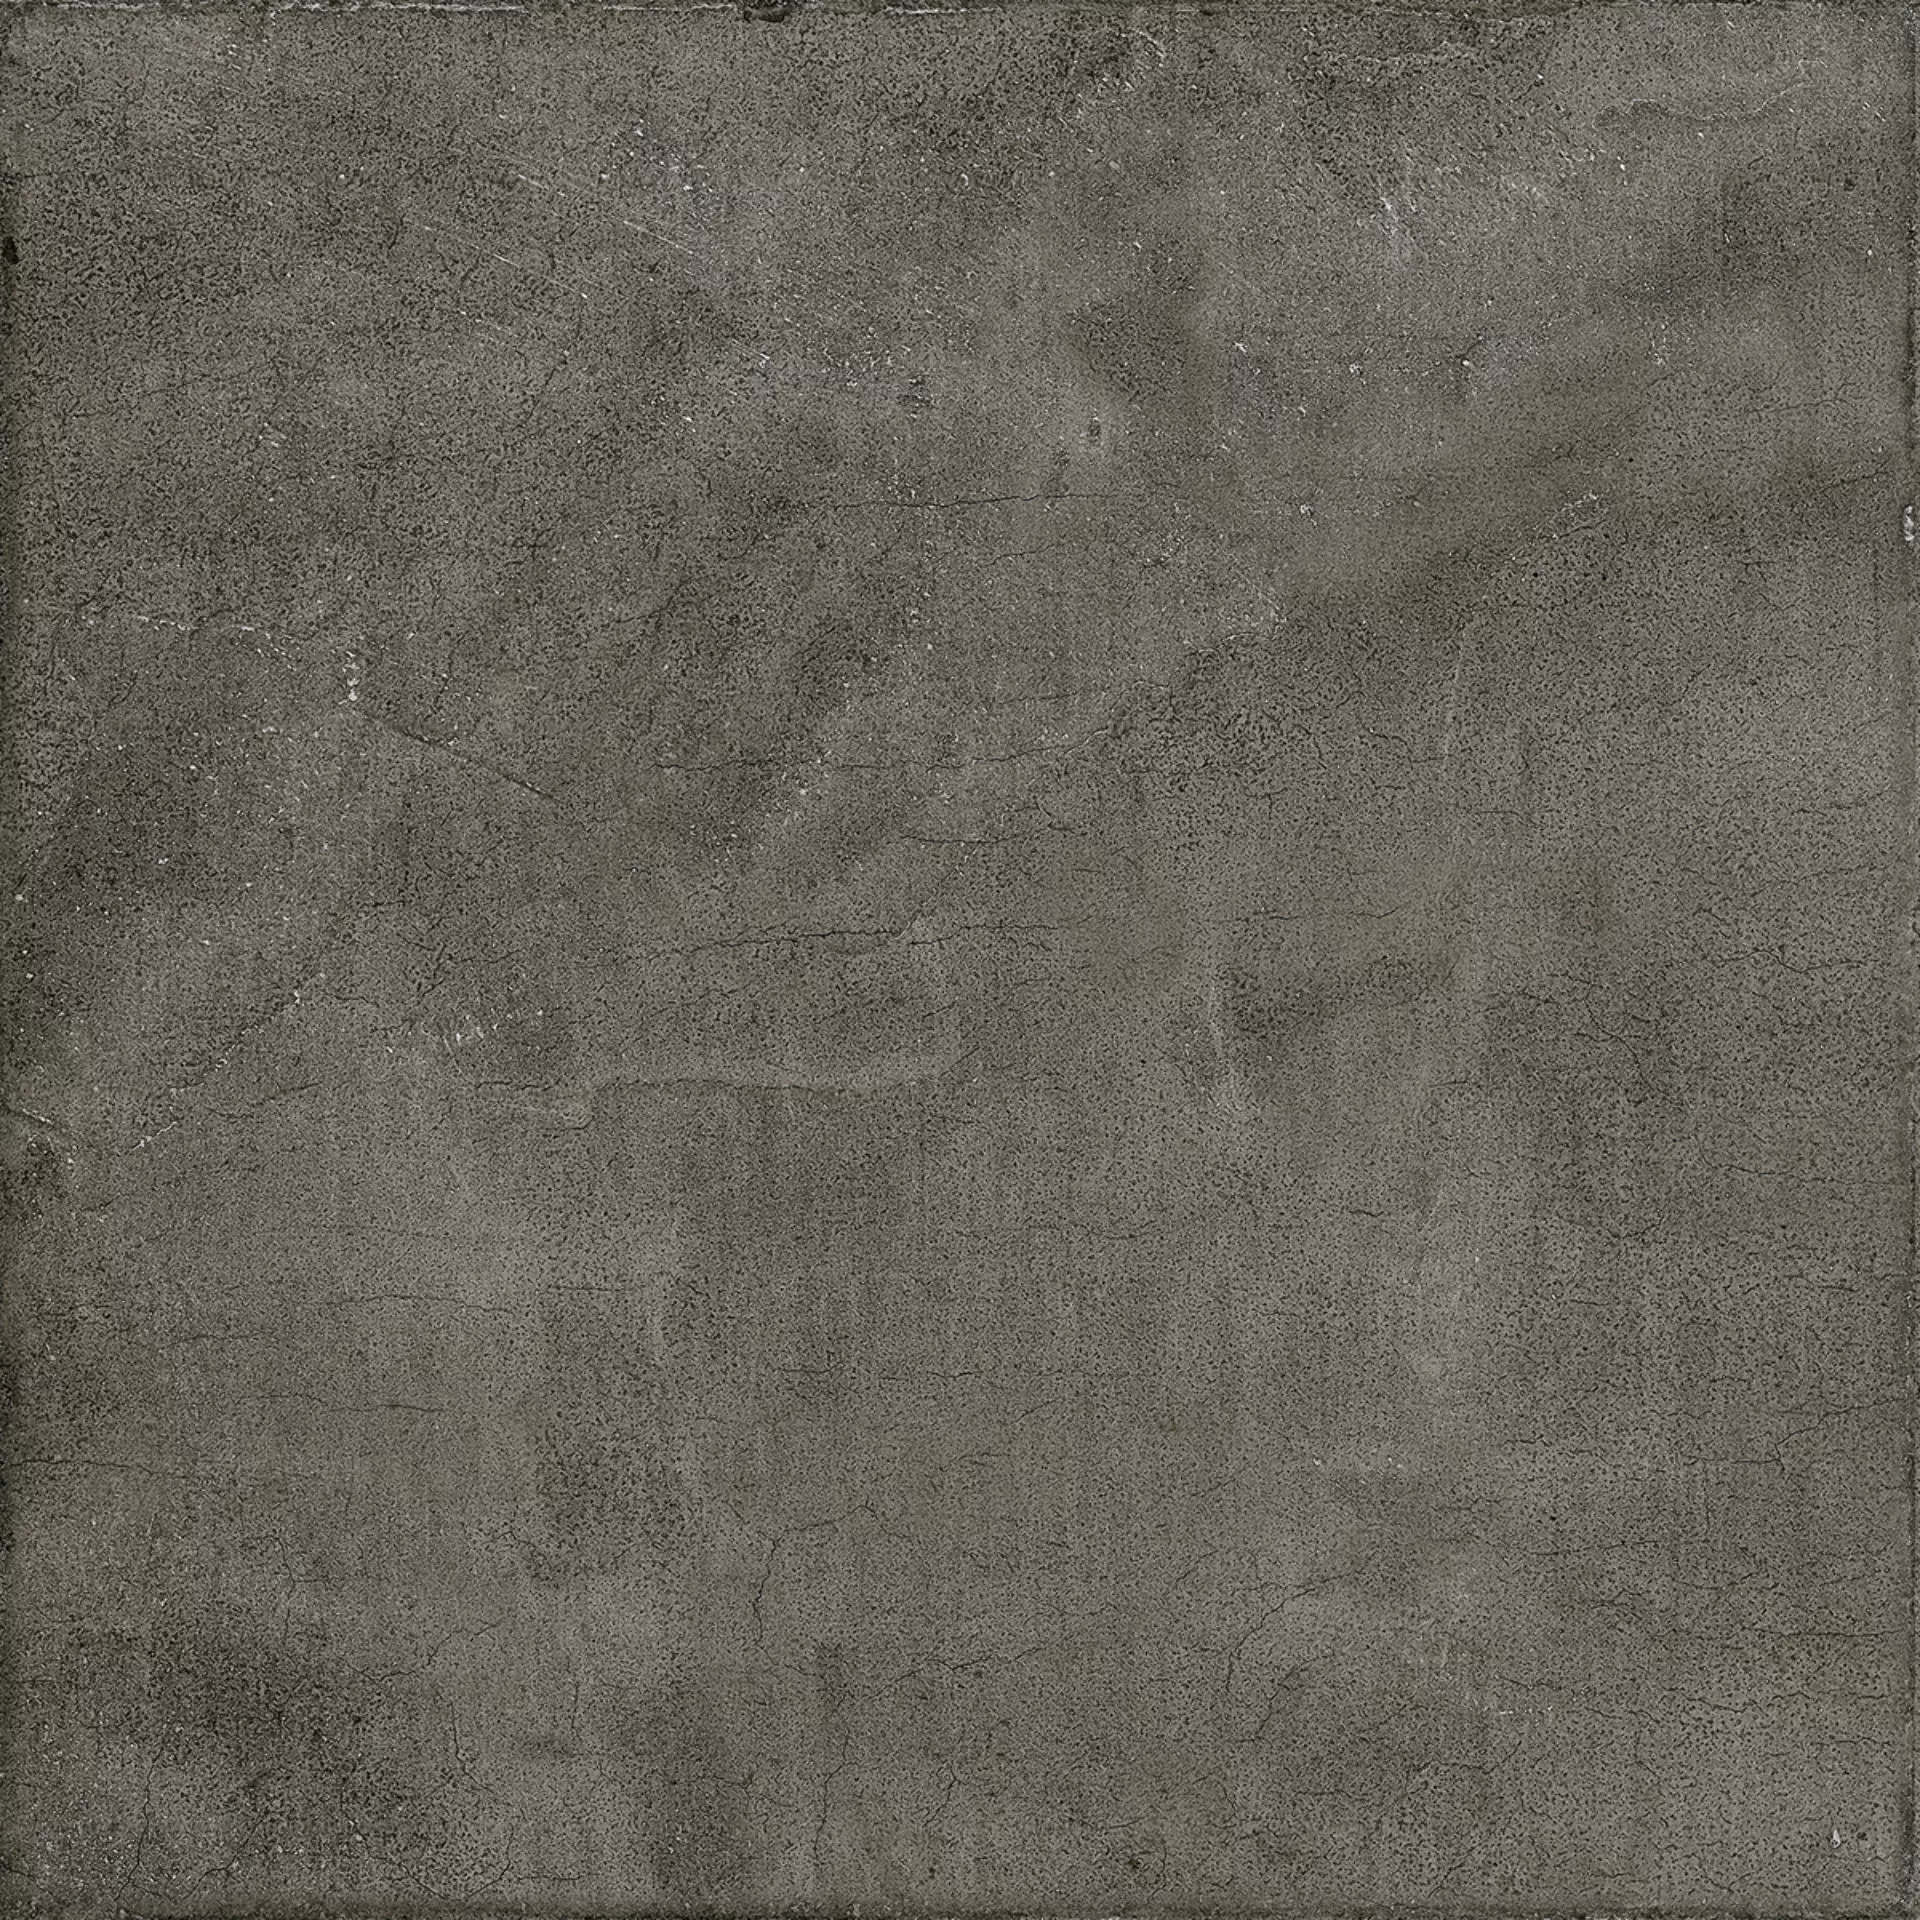 Sant Agostino Set Concrete Dark Natural CSASCDAR60 60x60cm rectified 10mm